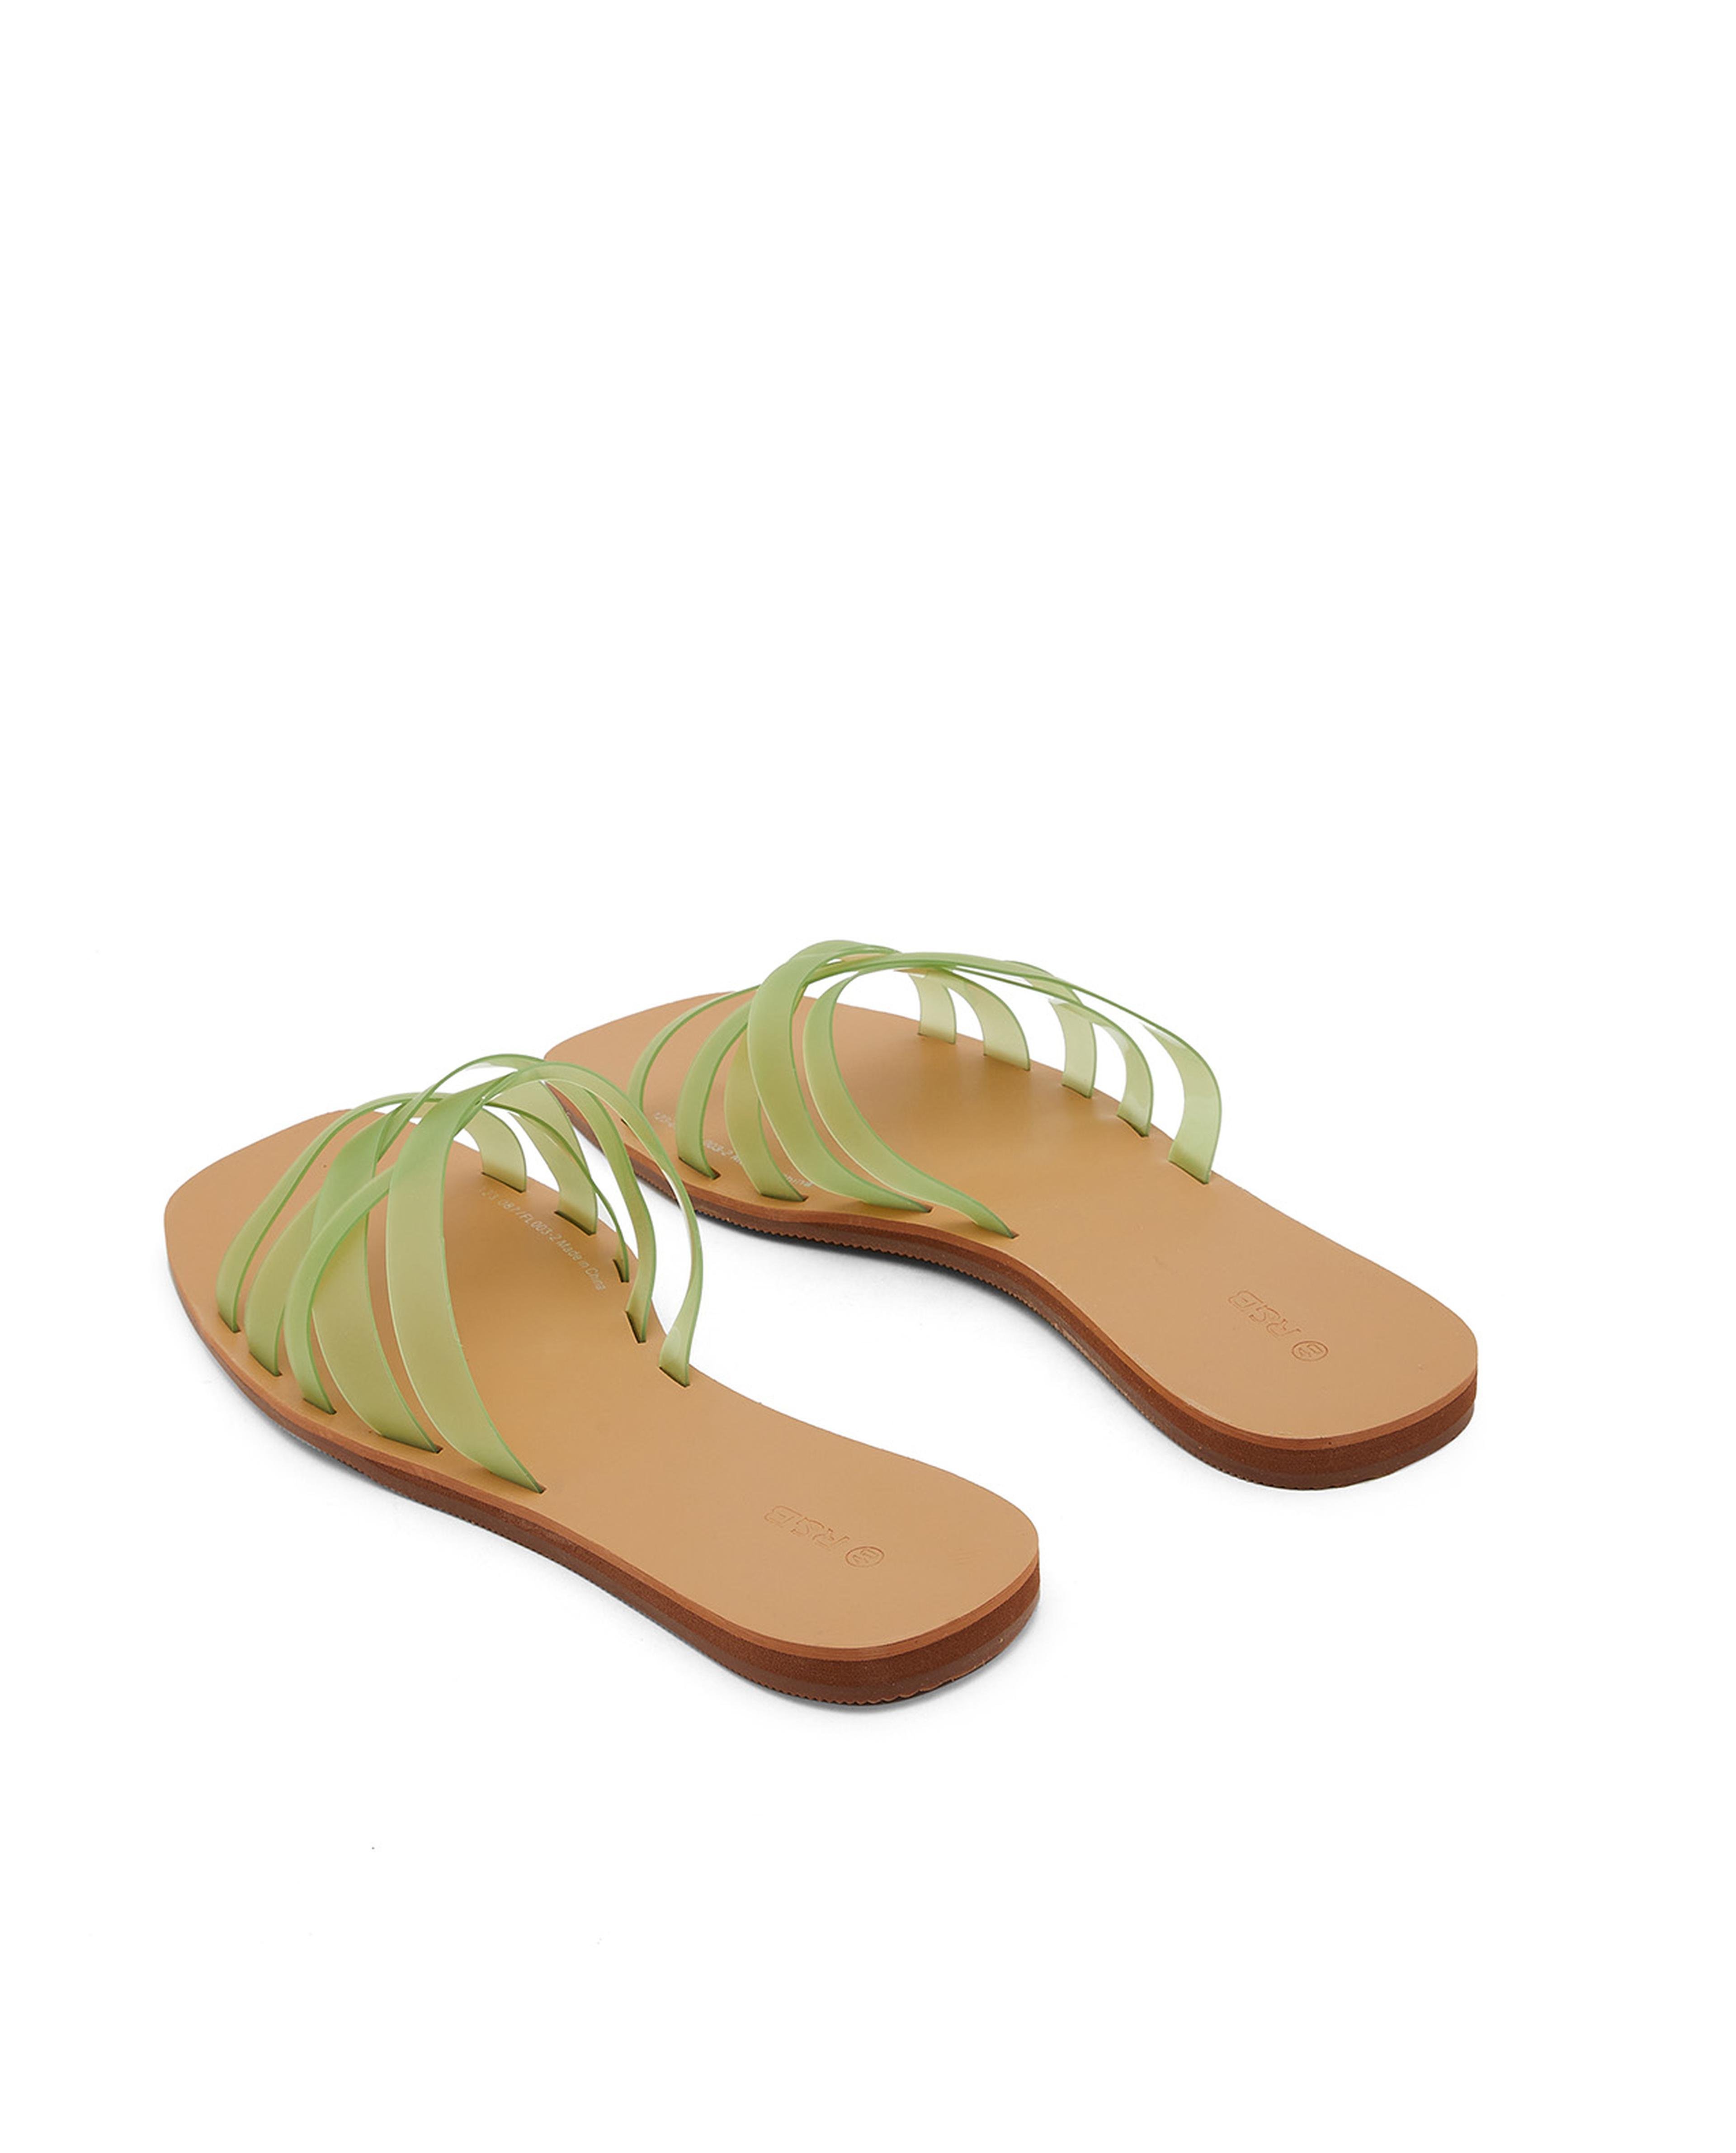 Criss-Cross Strap Flat Sandals